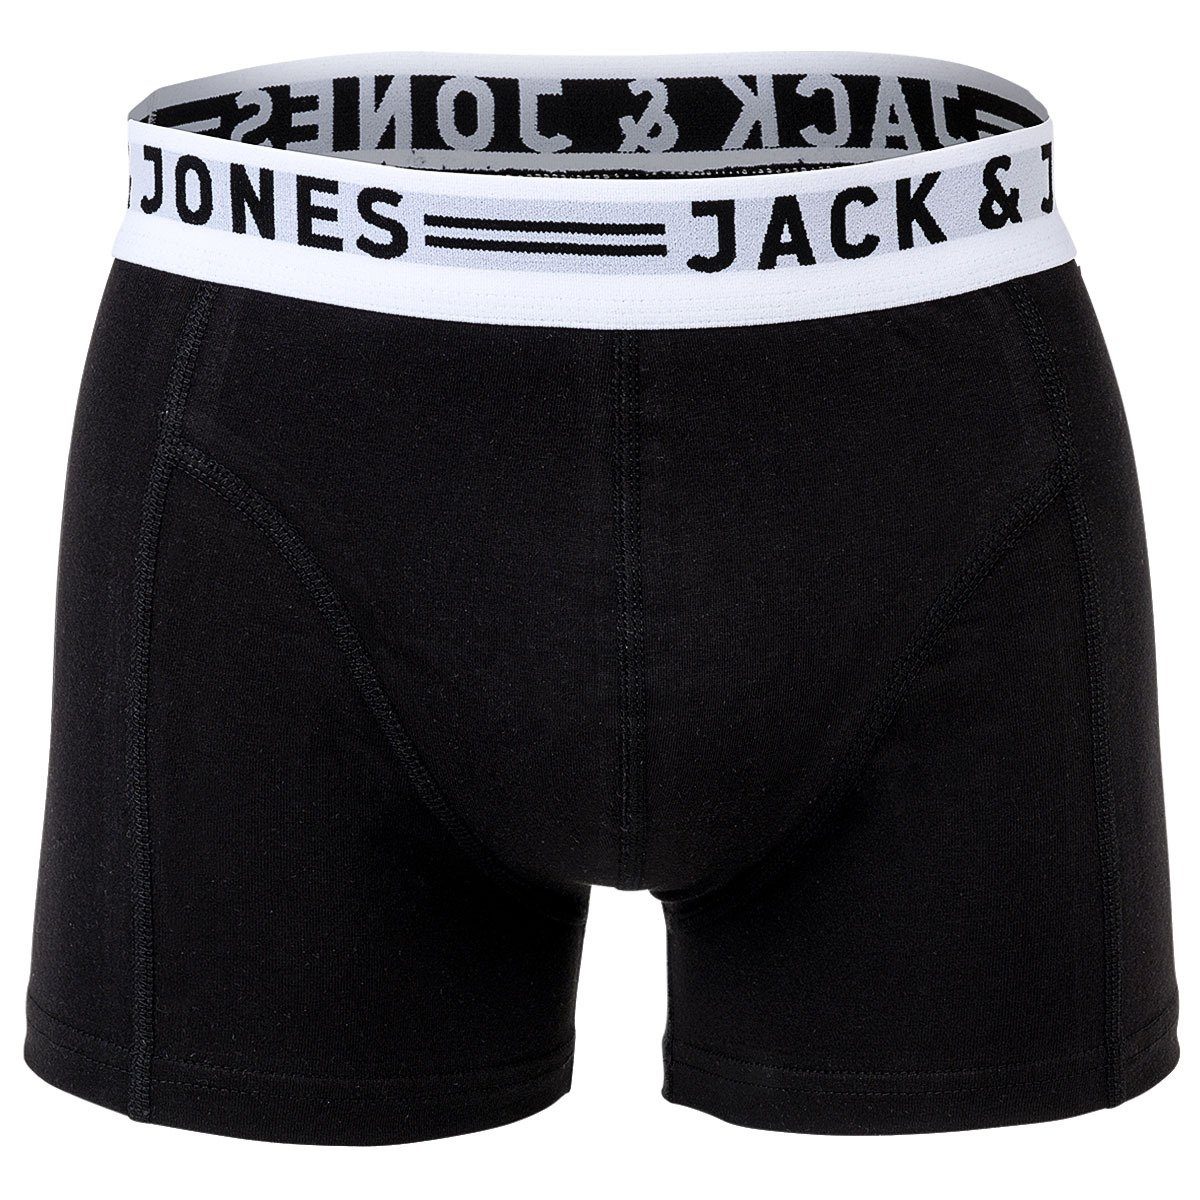 Boxer Jack SENSE Pack Jones & Herren Shorts, 6er Schwarz/Weiß TRUNKS Boxer -